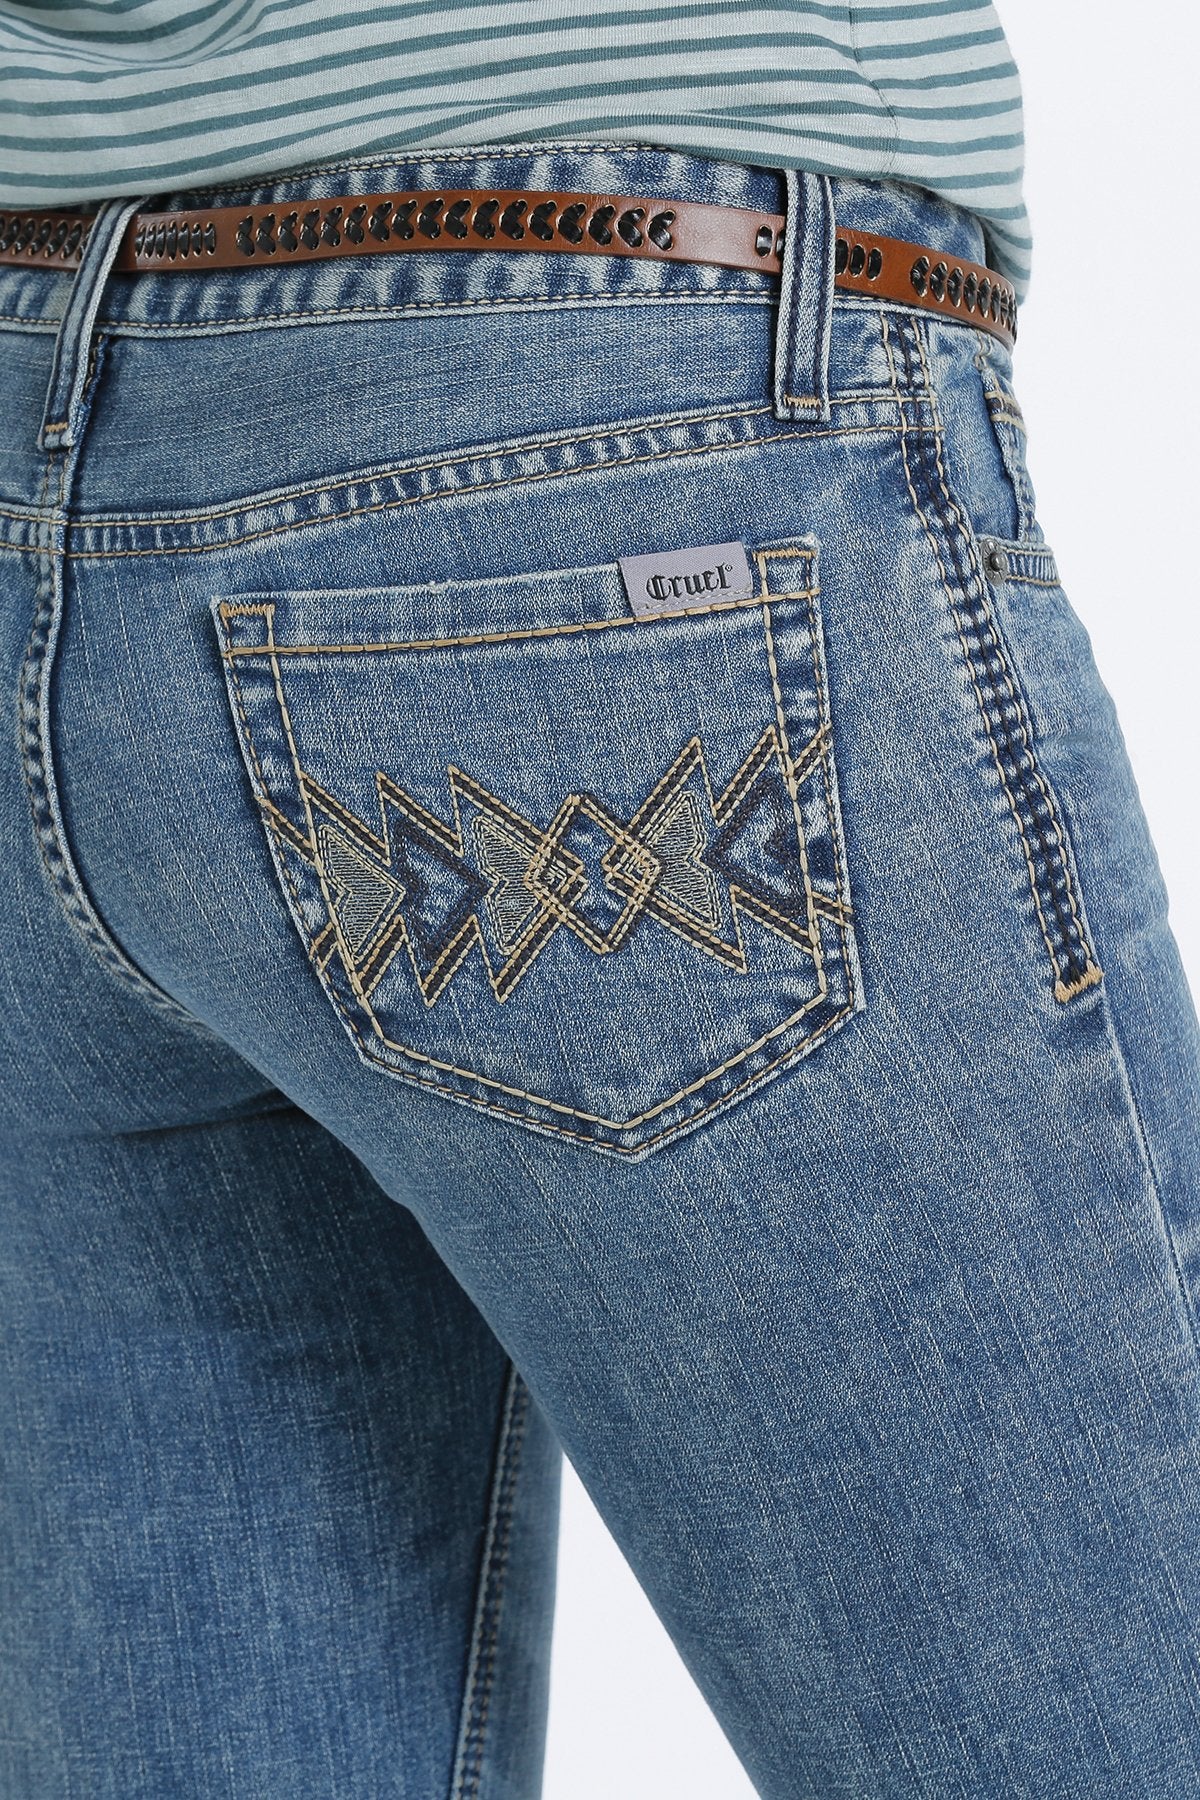 Cruel Denim Abbey Aztec Pocket Jean